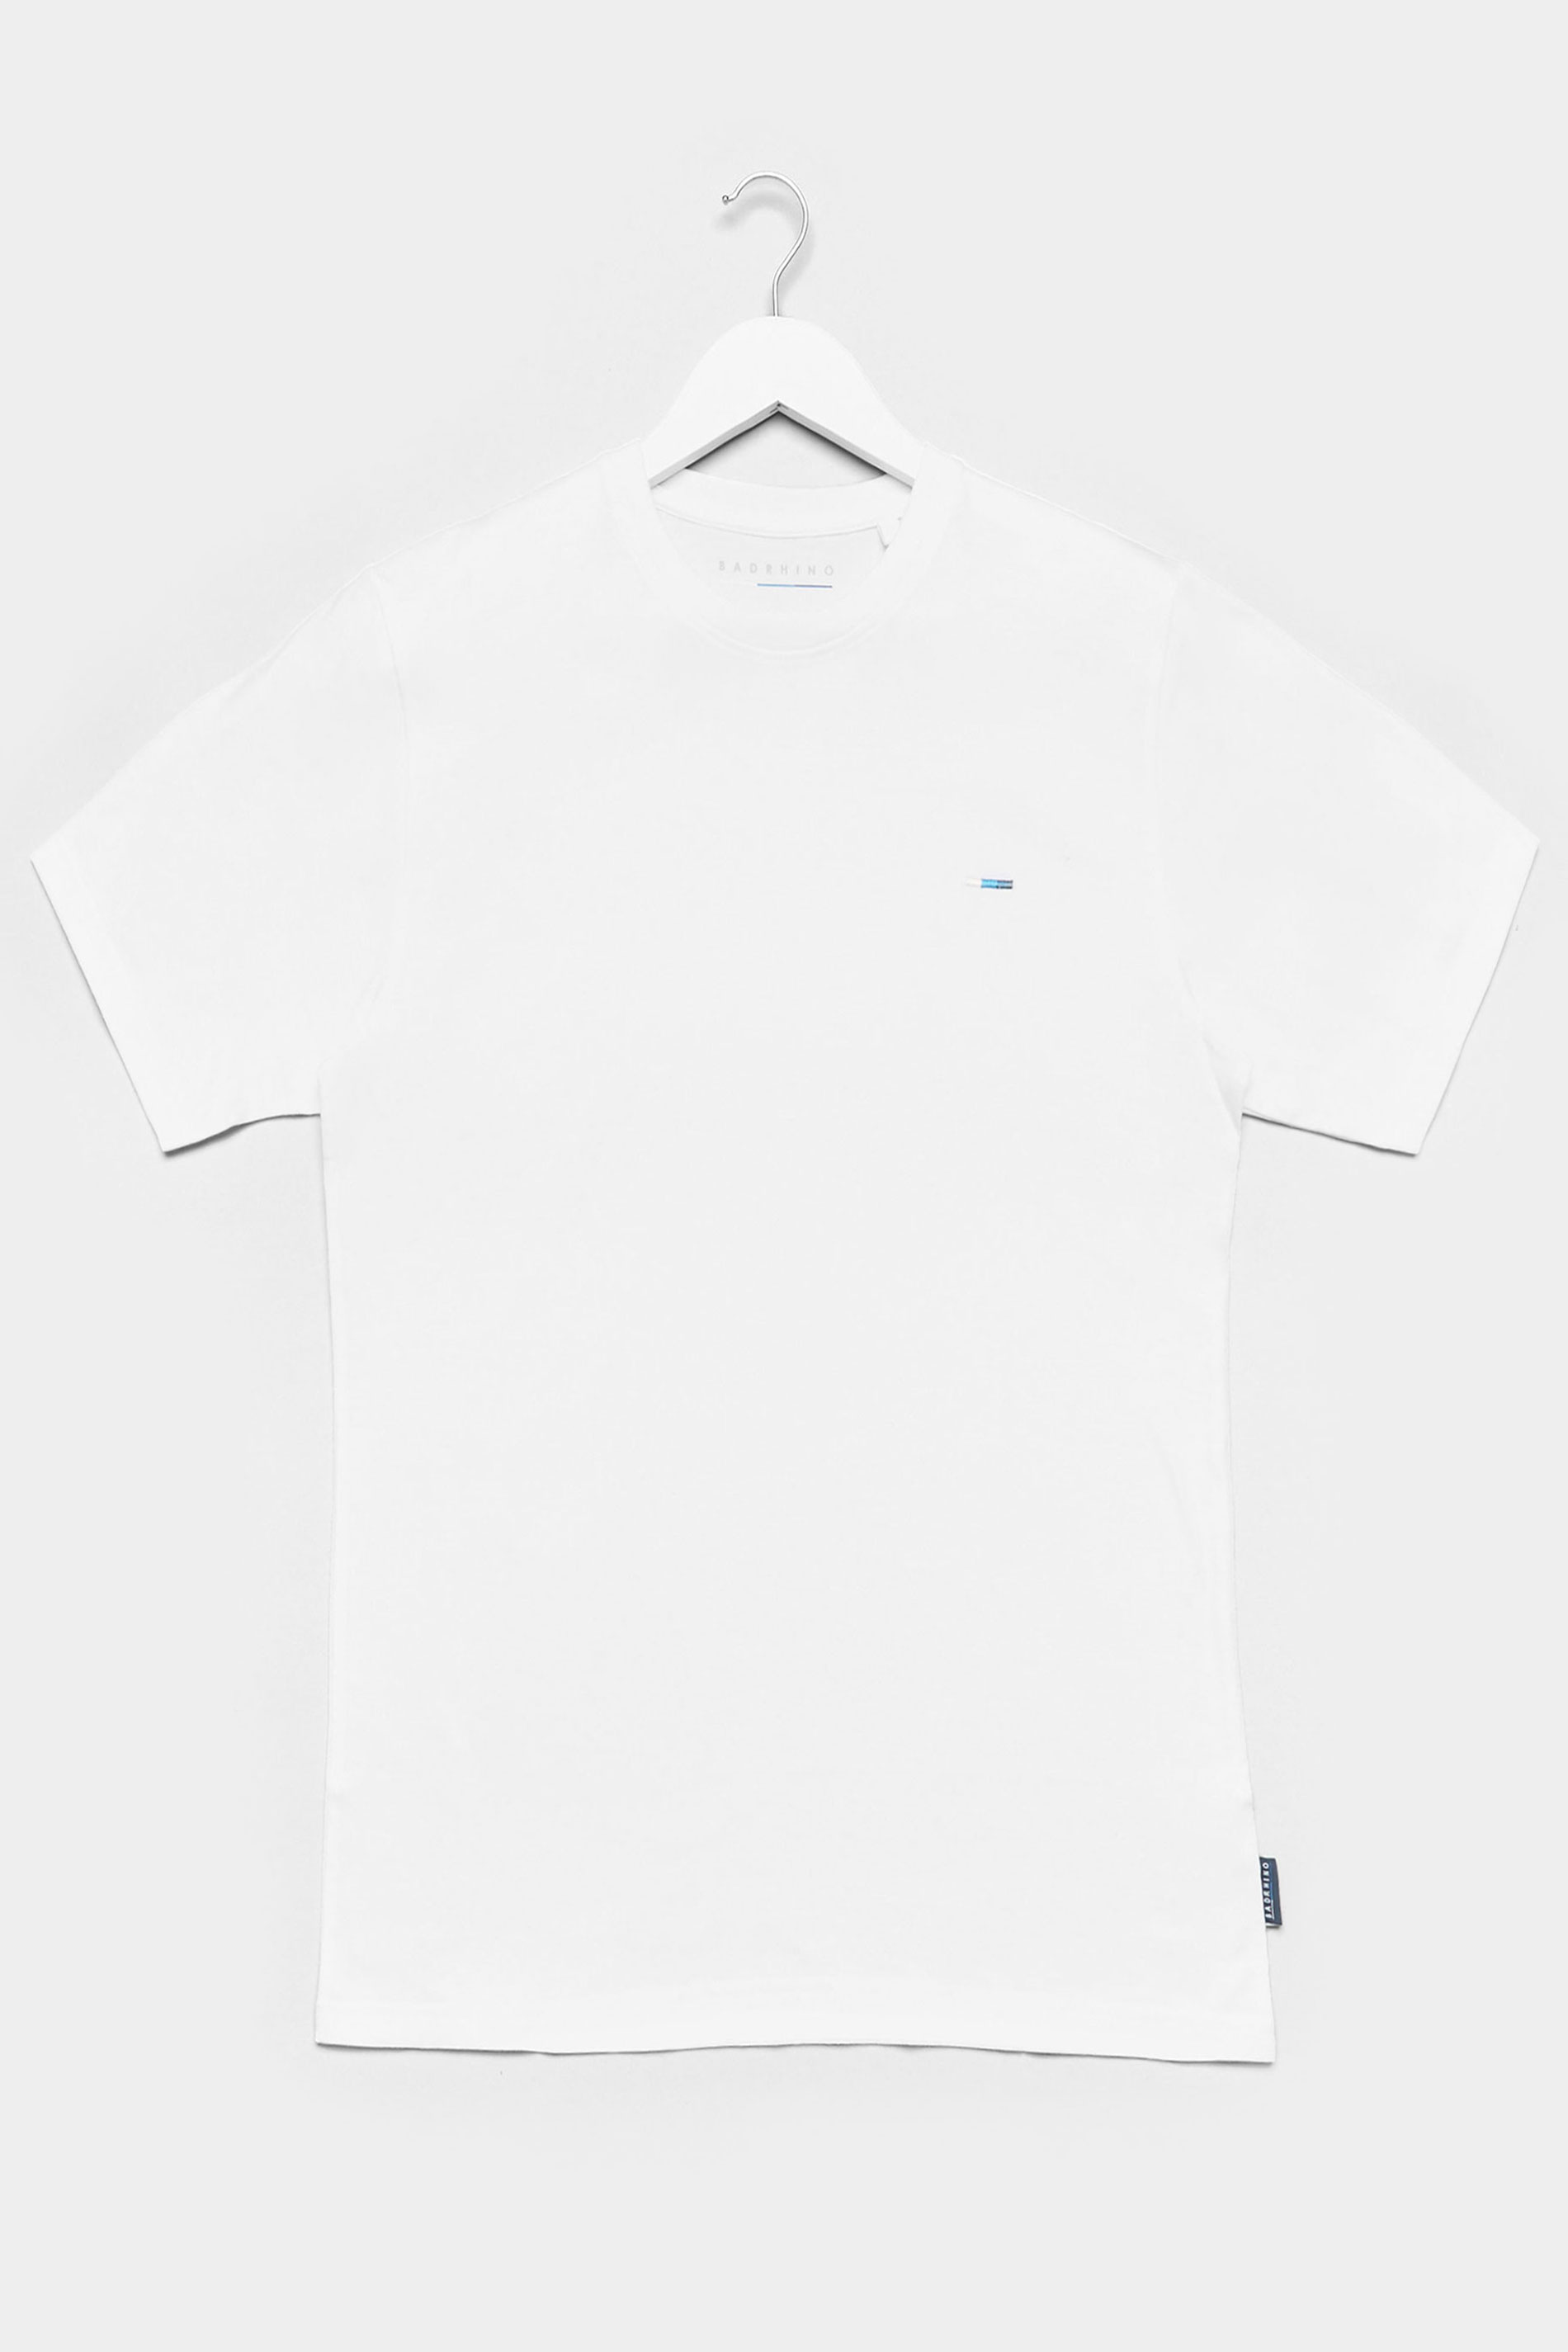 BadRhino Big & Tall White Recycled Plain T-Shirt 1